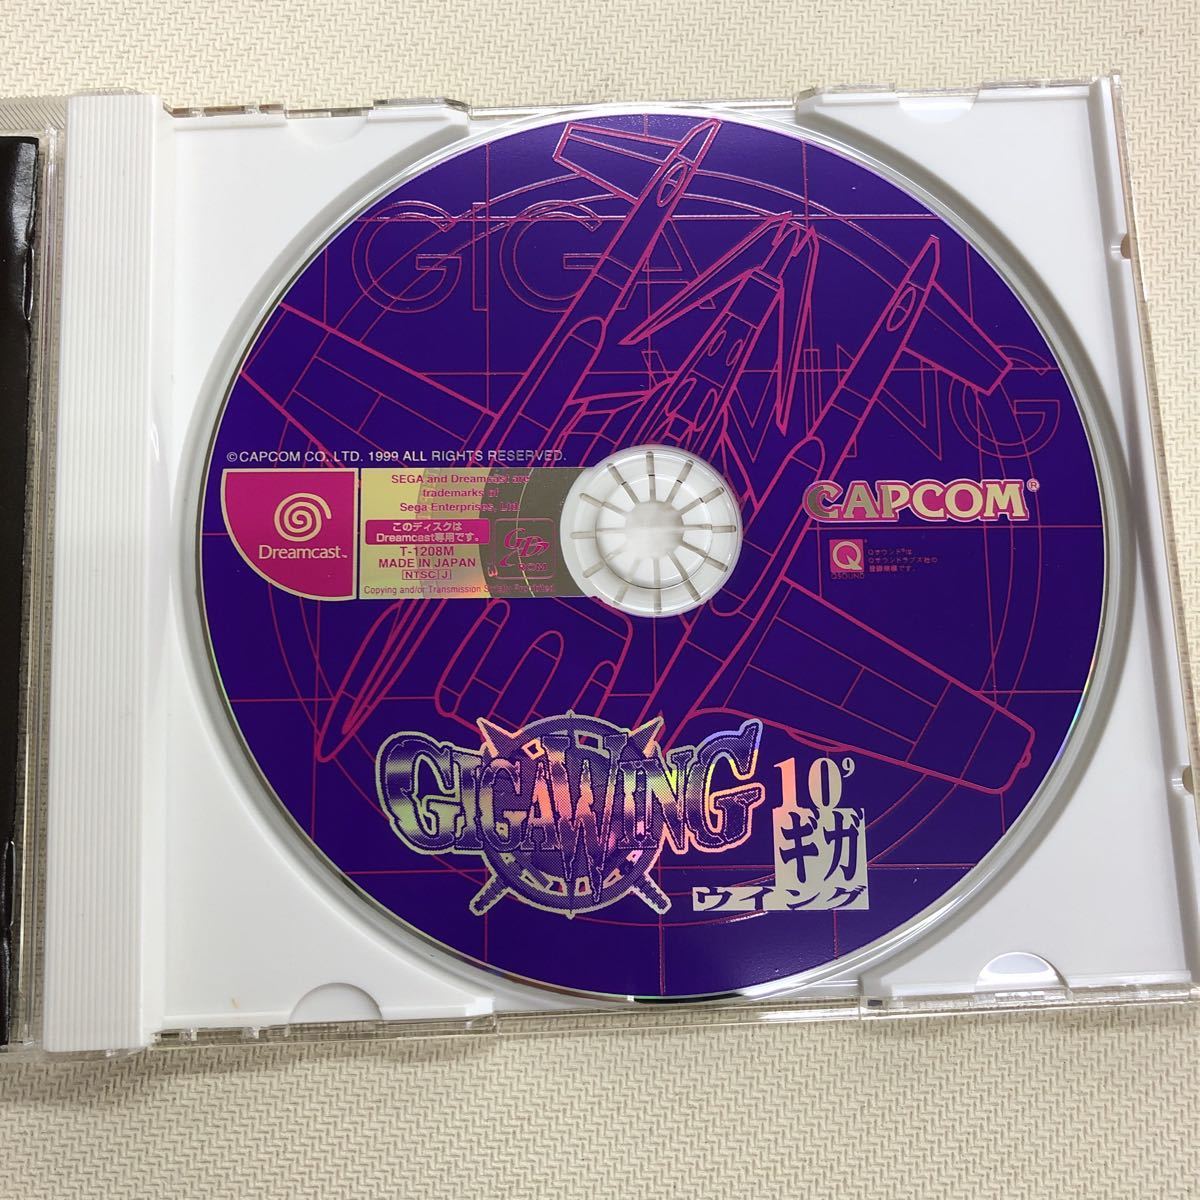  Dreamcast Giga Wing beautiful goods obi leaf document 